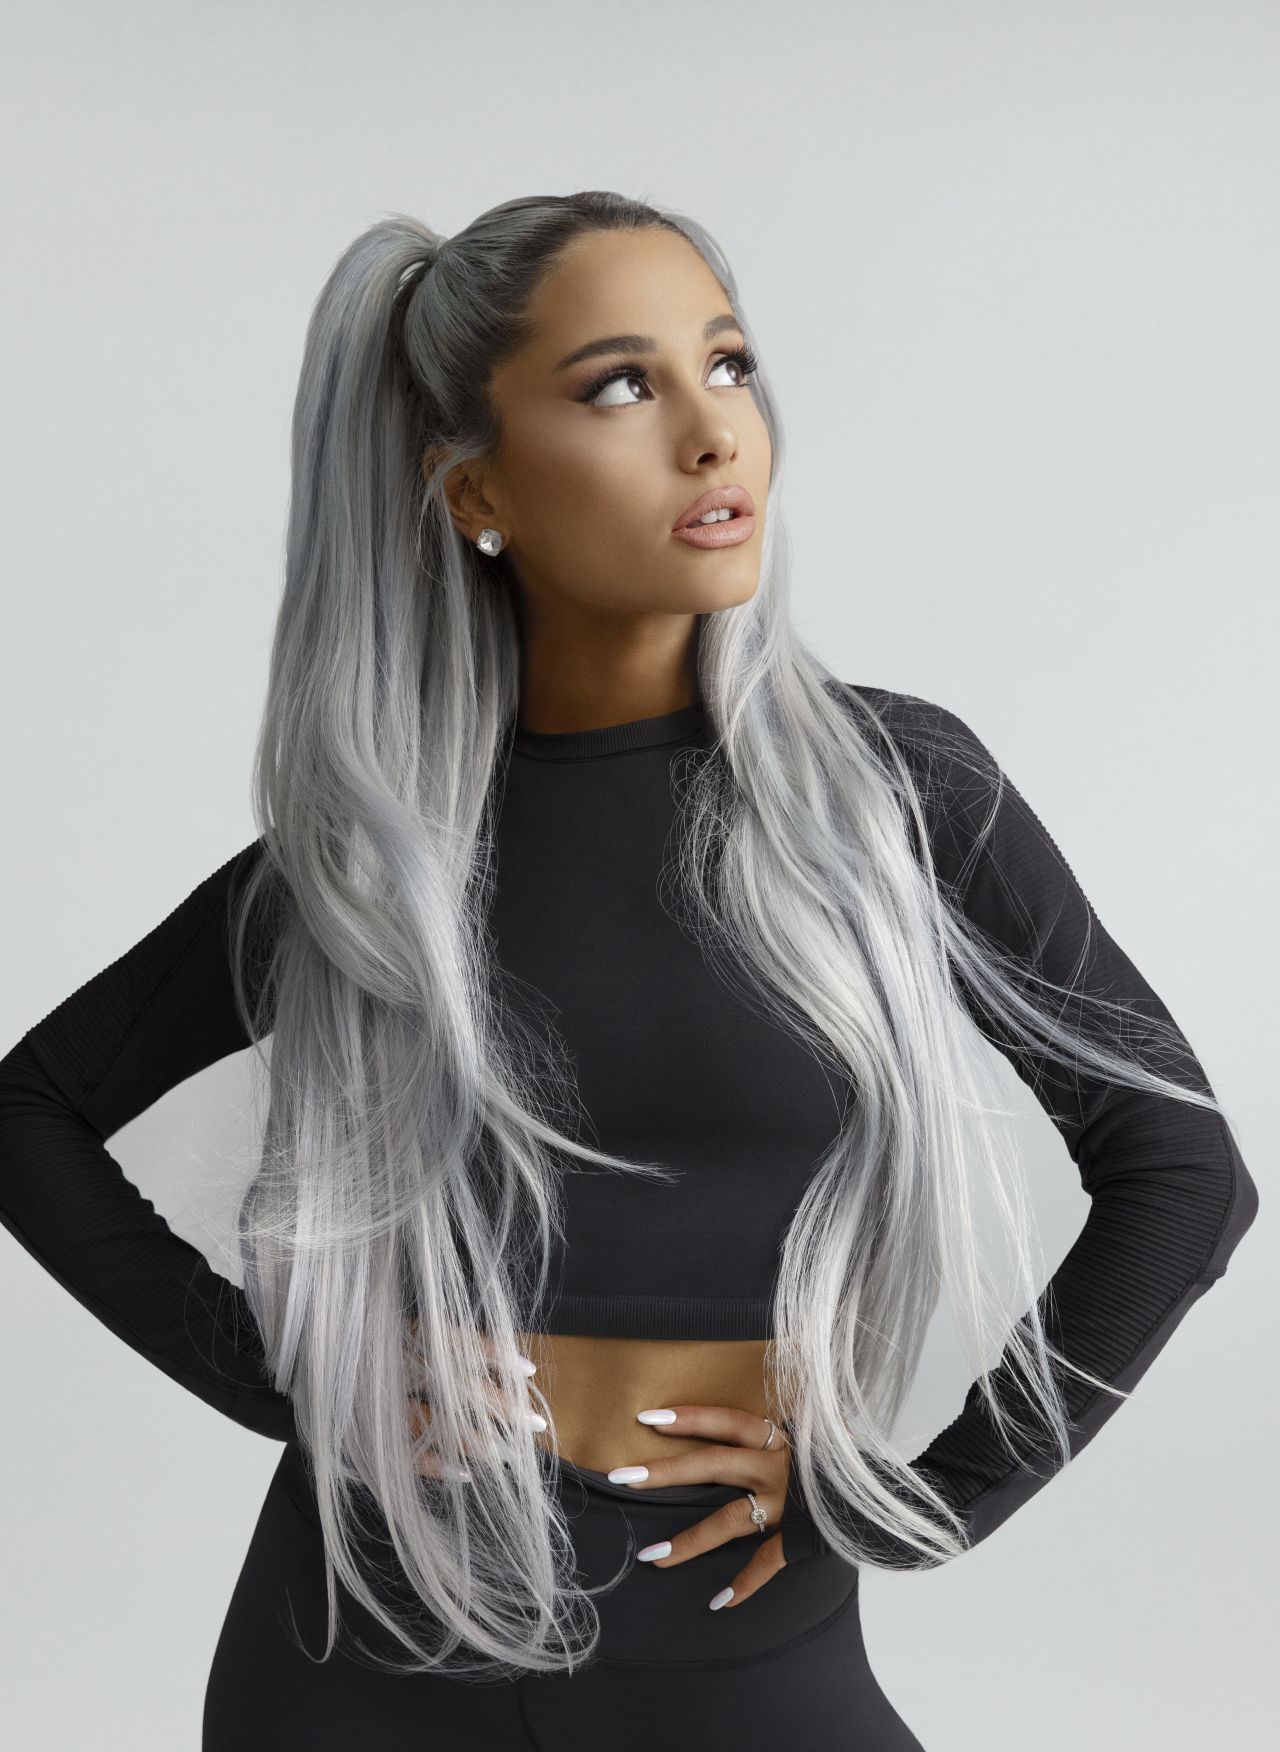 Ariana Grande - Reebok "Be More Human" Campaign Photoshoot ...